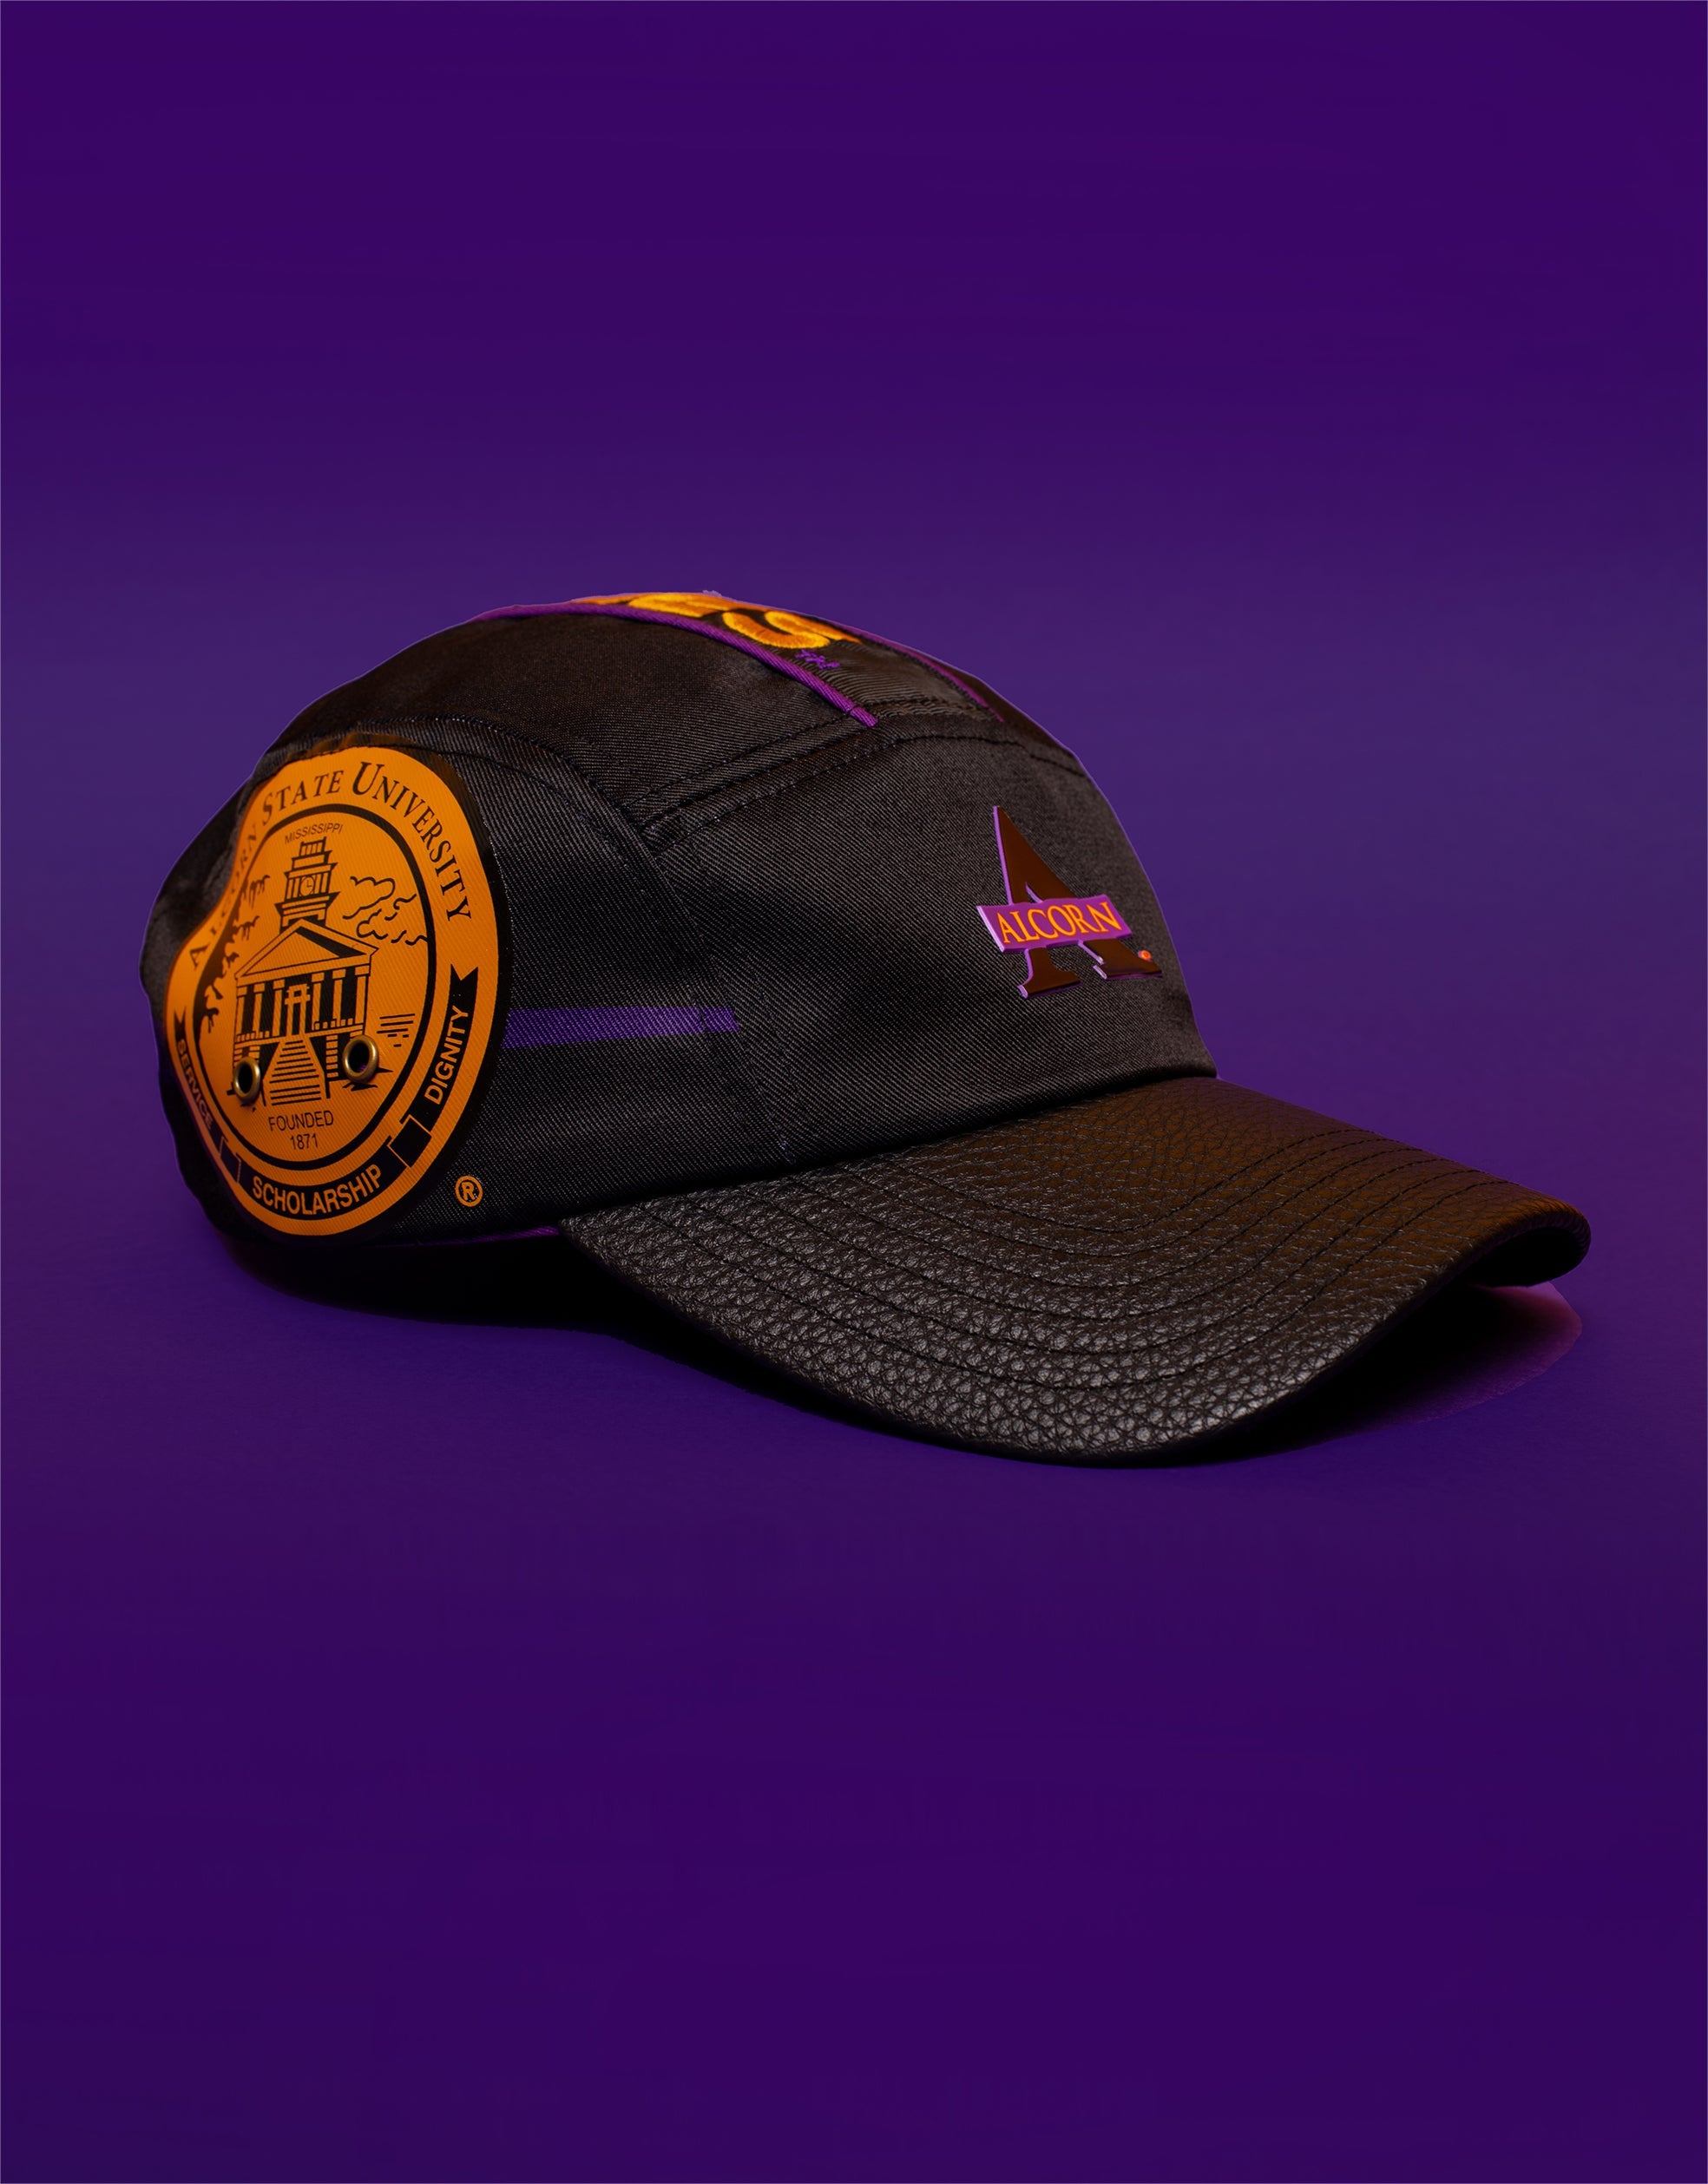 TheYard - BLACKOUT - Alcorn State University - HBCU Hat